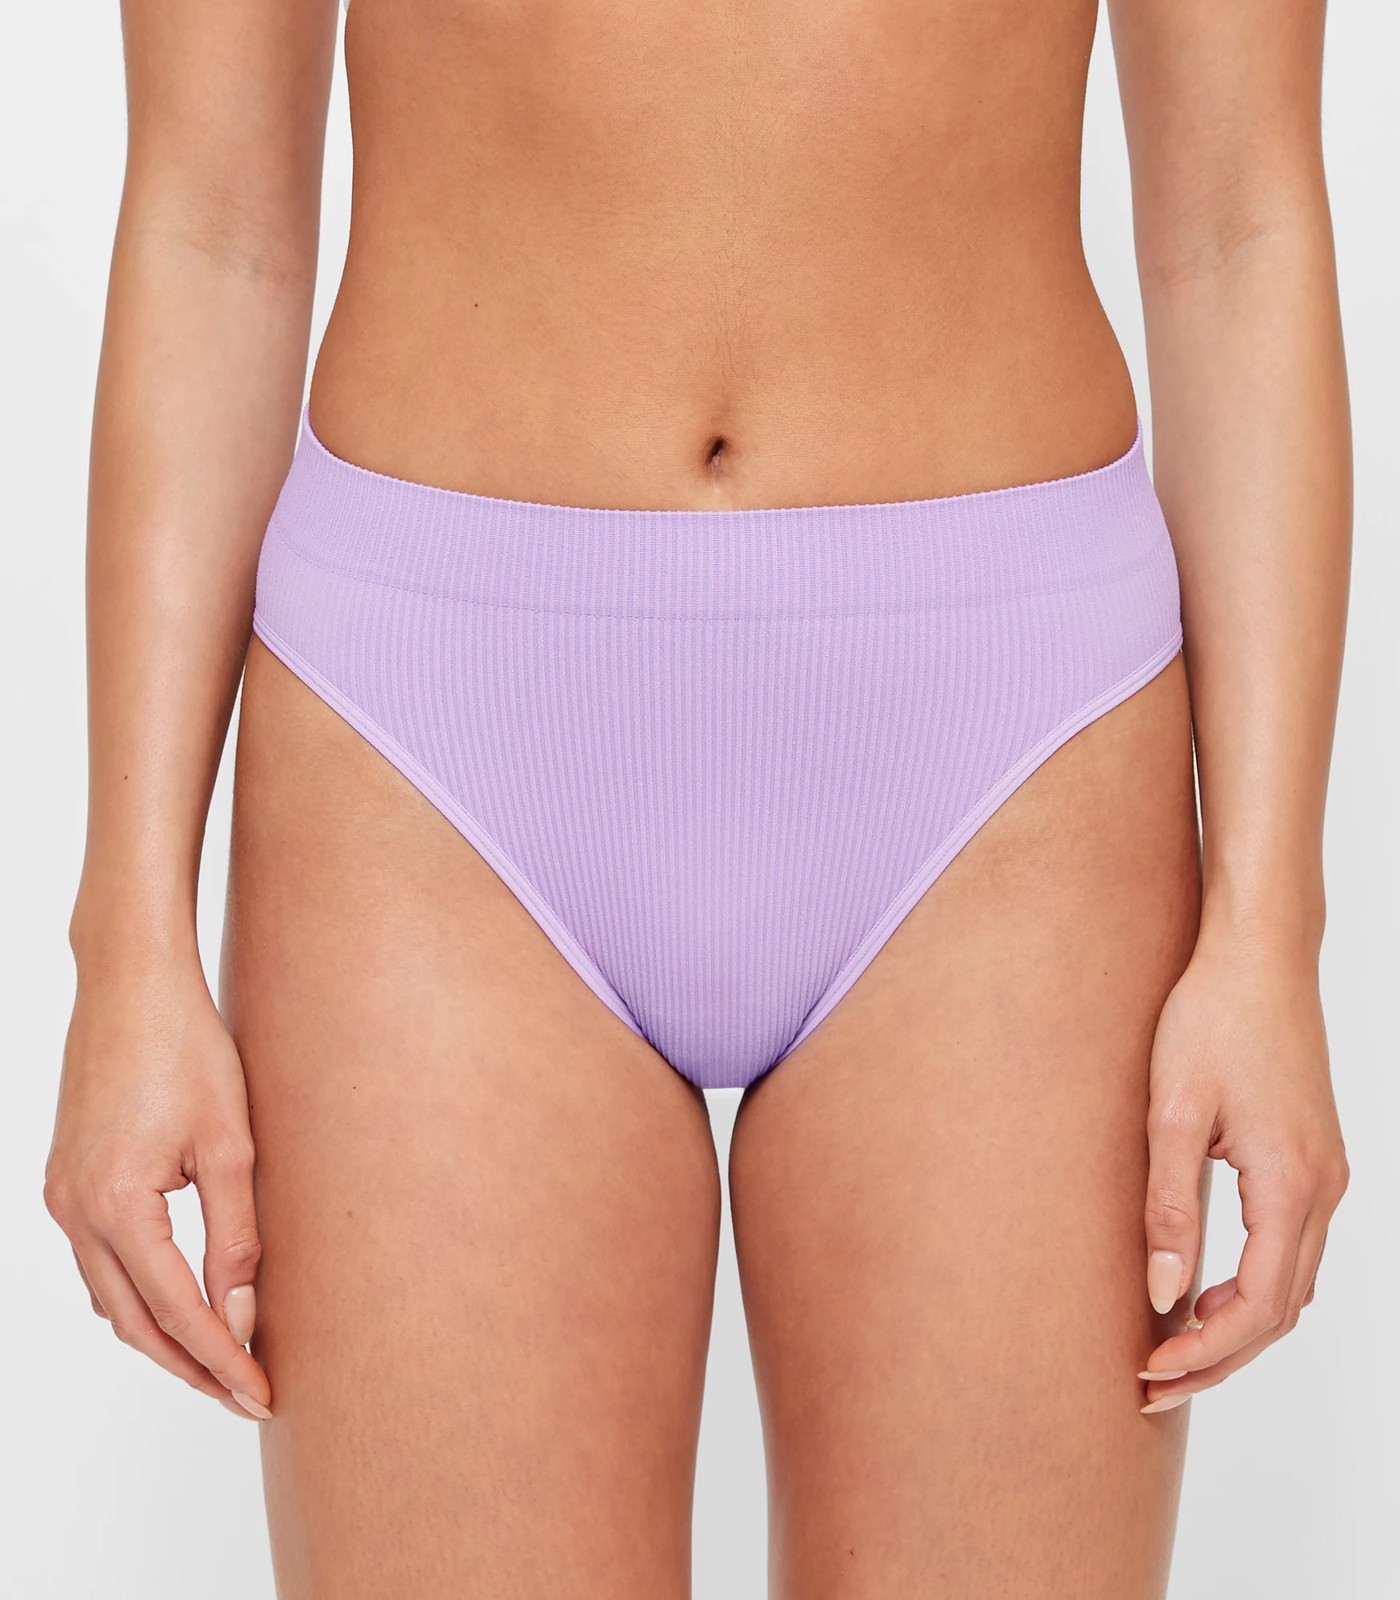 Nylon : Panties & Underwear for Women : Target